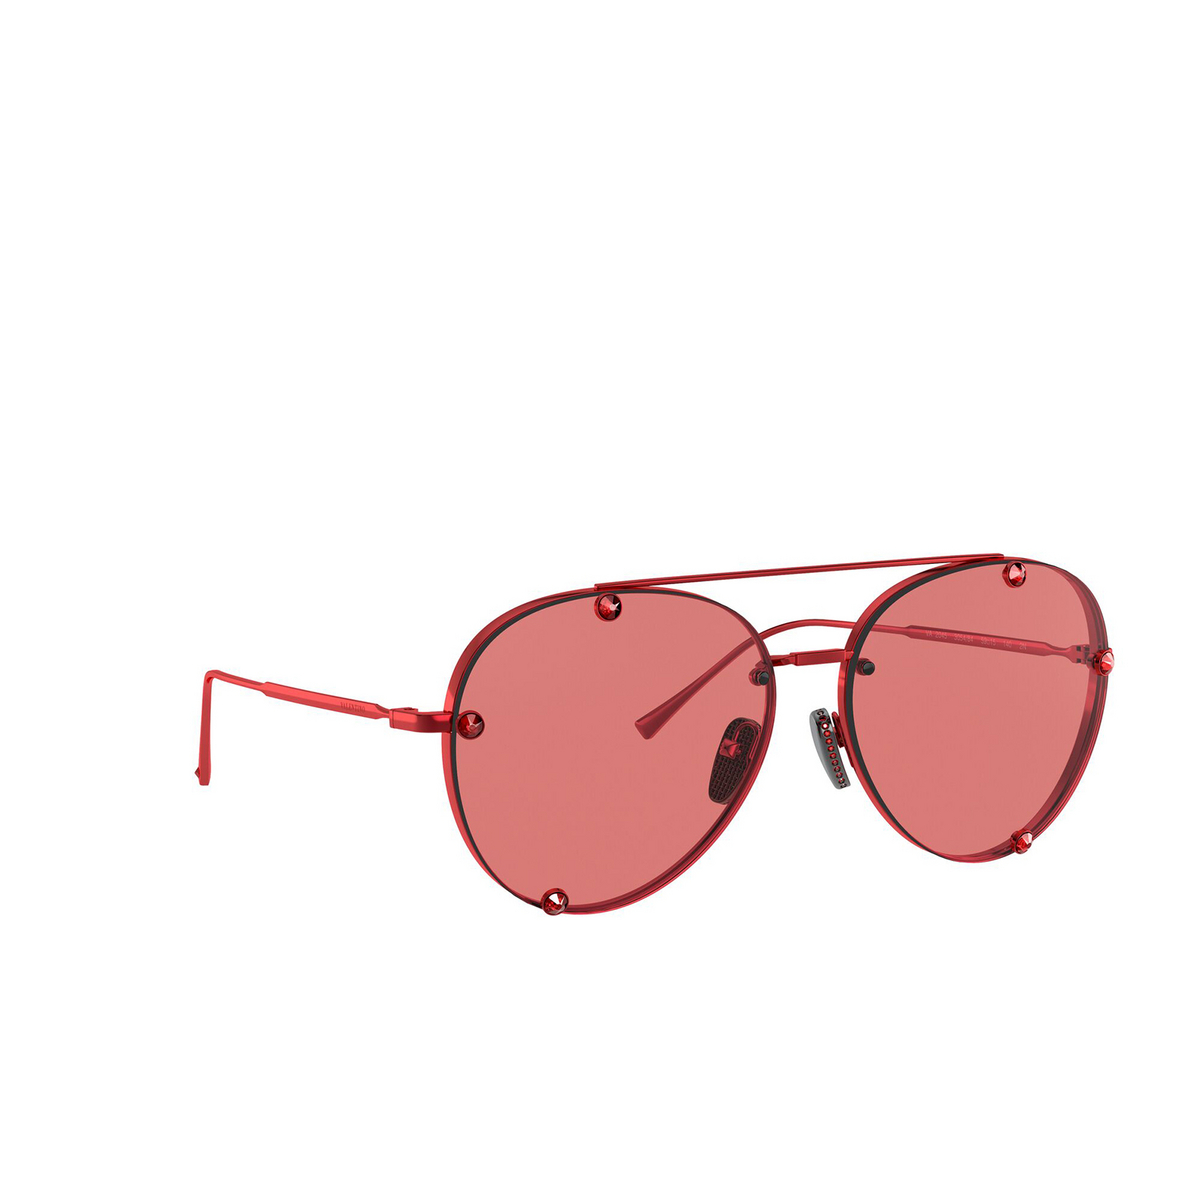 Valentino® Aviator Sunglasses: VA2045 color Red 305484 - three-quarters view.